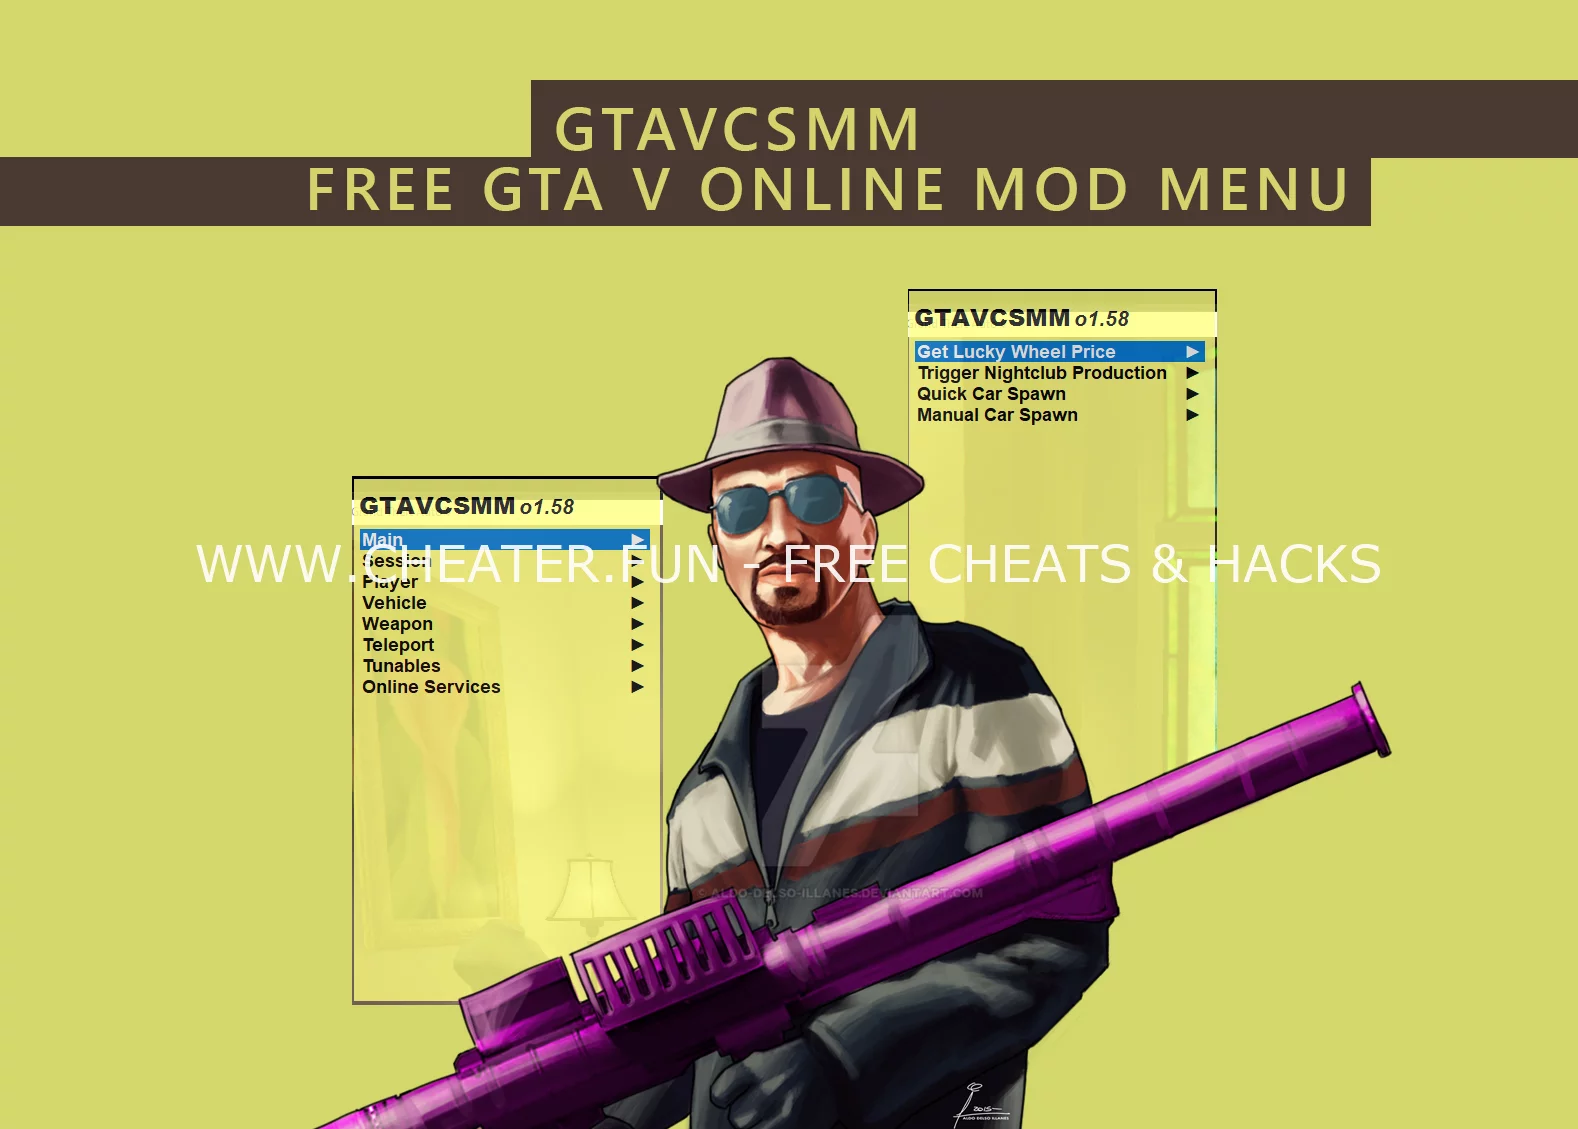 GTAVCSMM Free GTA V Online Mod Menu v1.58